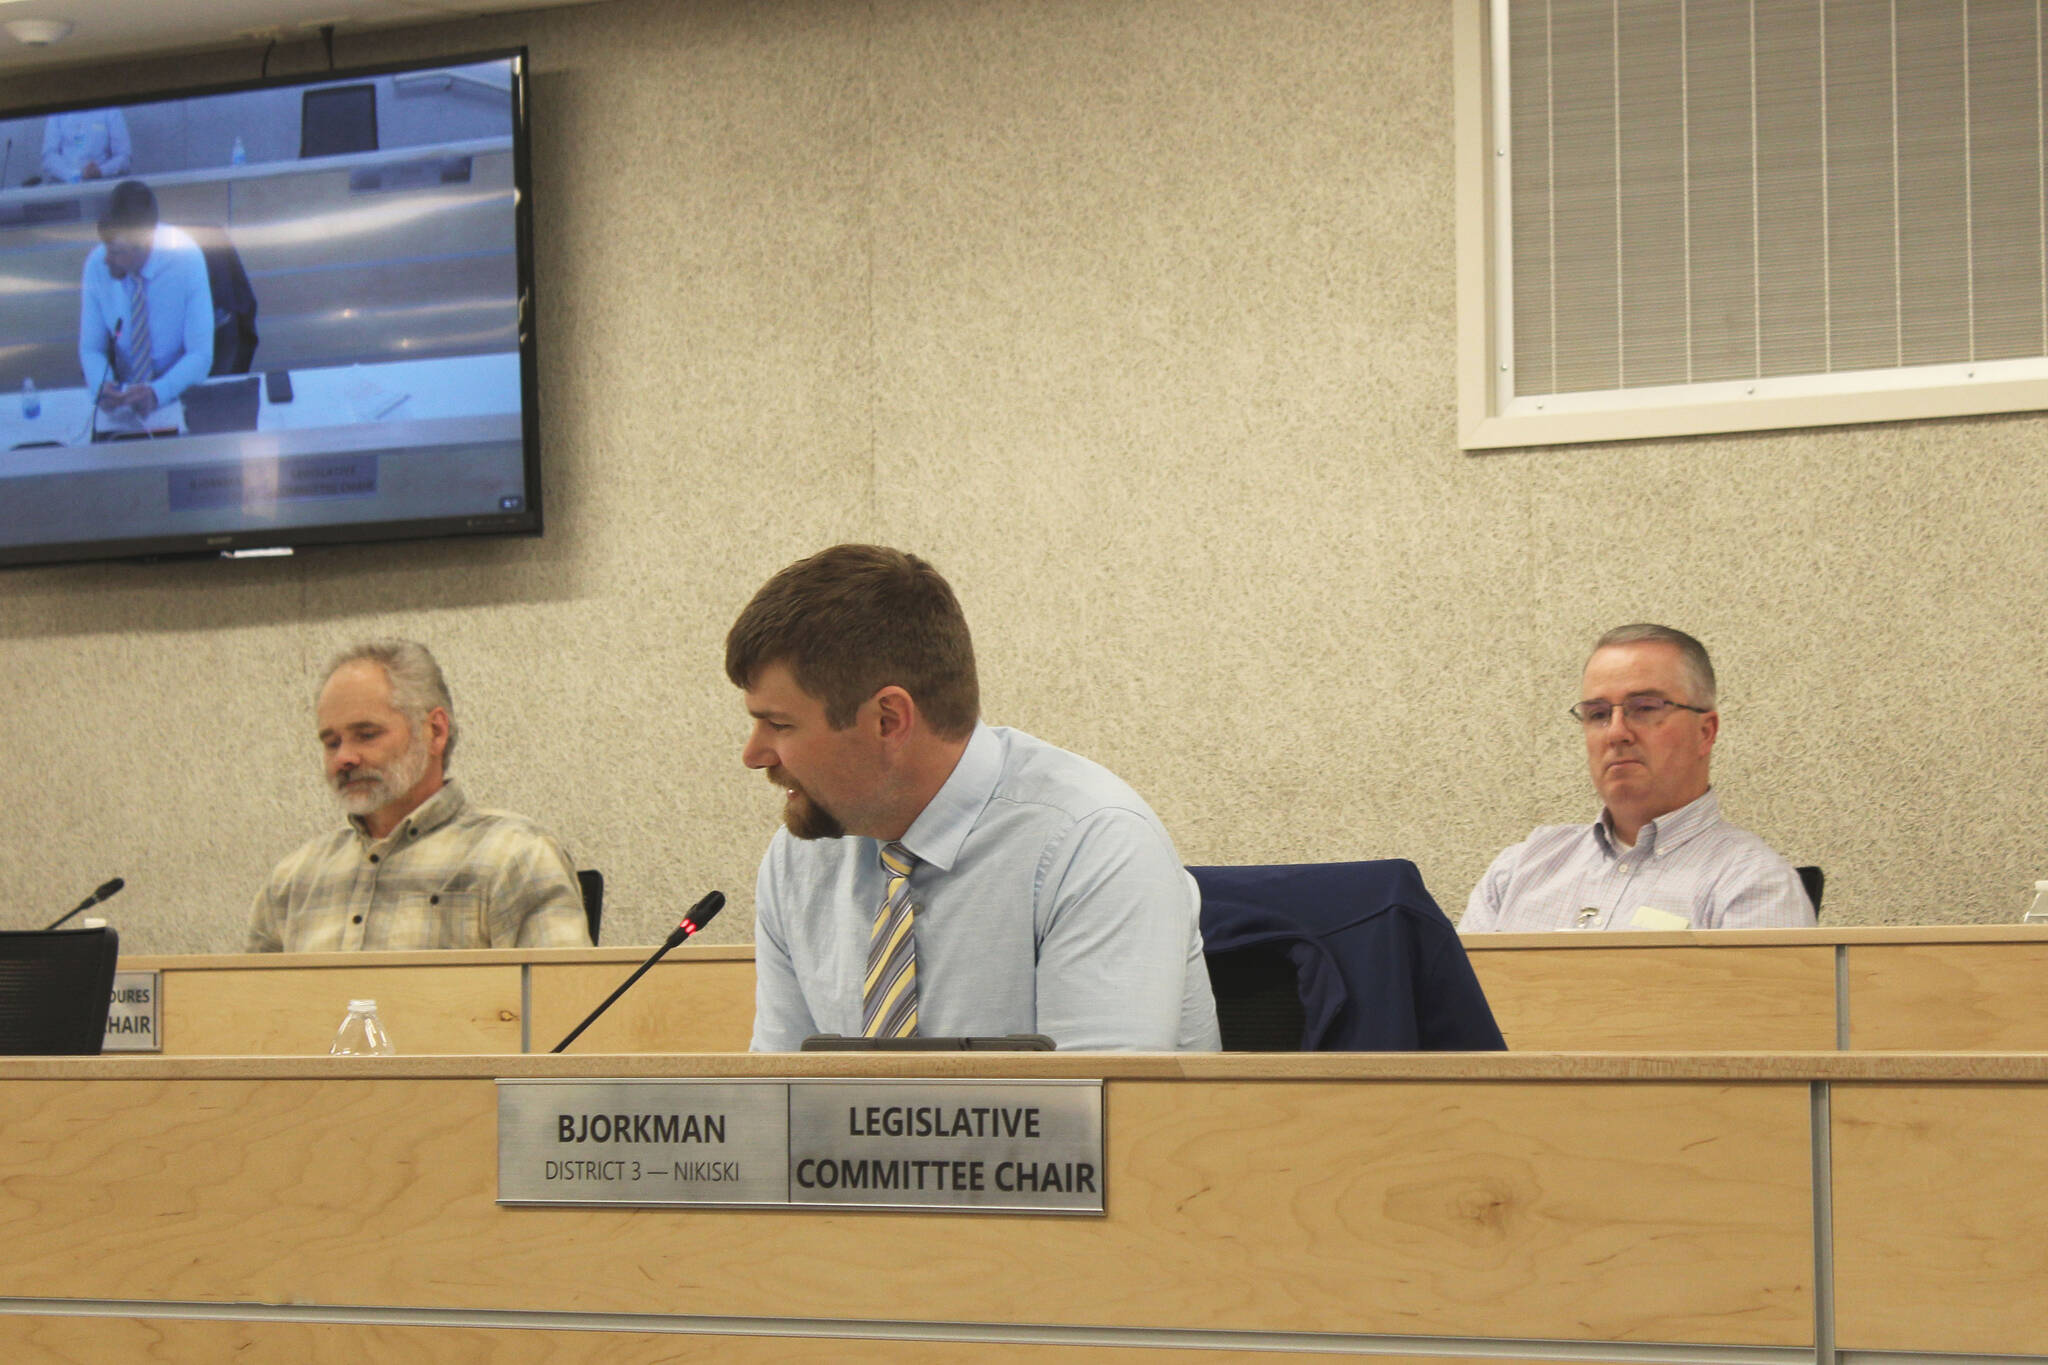 Kenai Peninsula Borough Assembly member Jesse Bjorkman (center) speaks while Aaron Rhoades (right) looks on during an assembly meeting on Tuesday, April 19, 2022 in Soldotna, Alaska. (Ashlyn O’Hara/Peninsula Clarion)